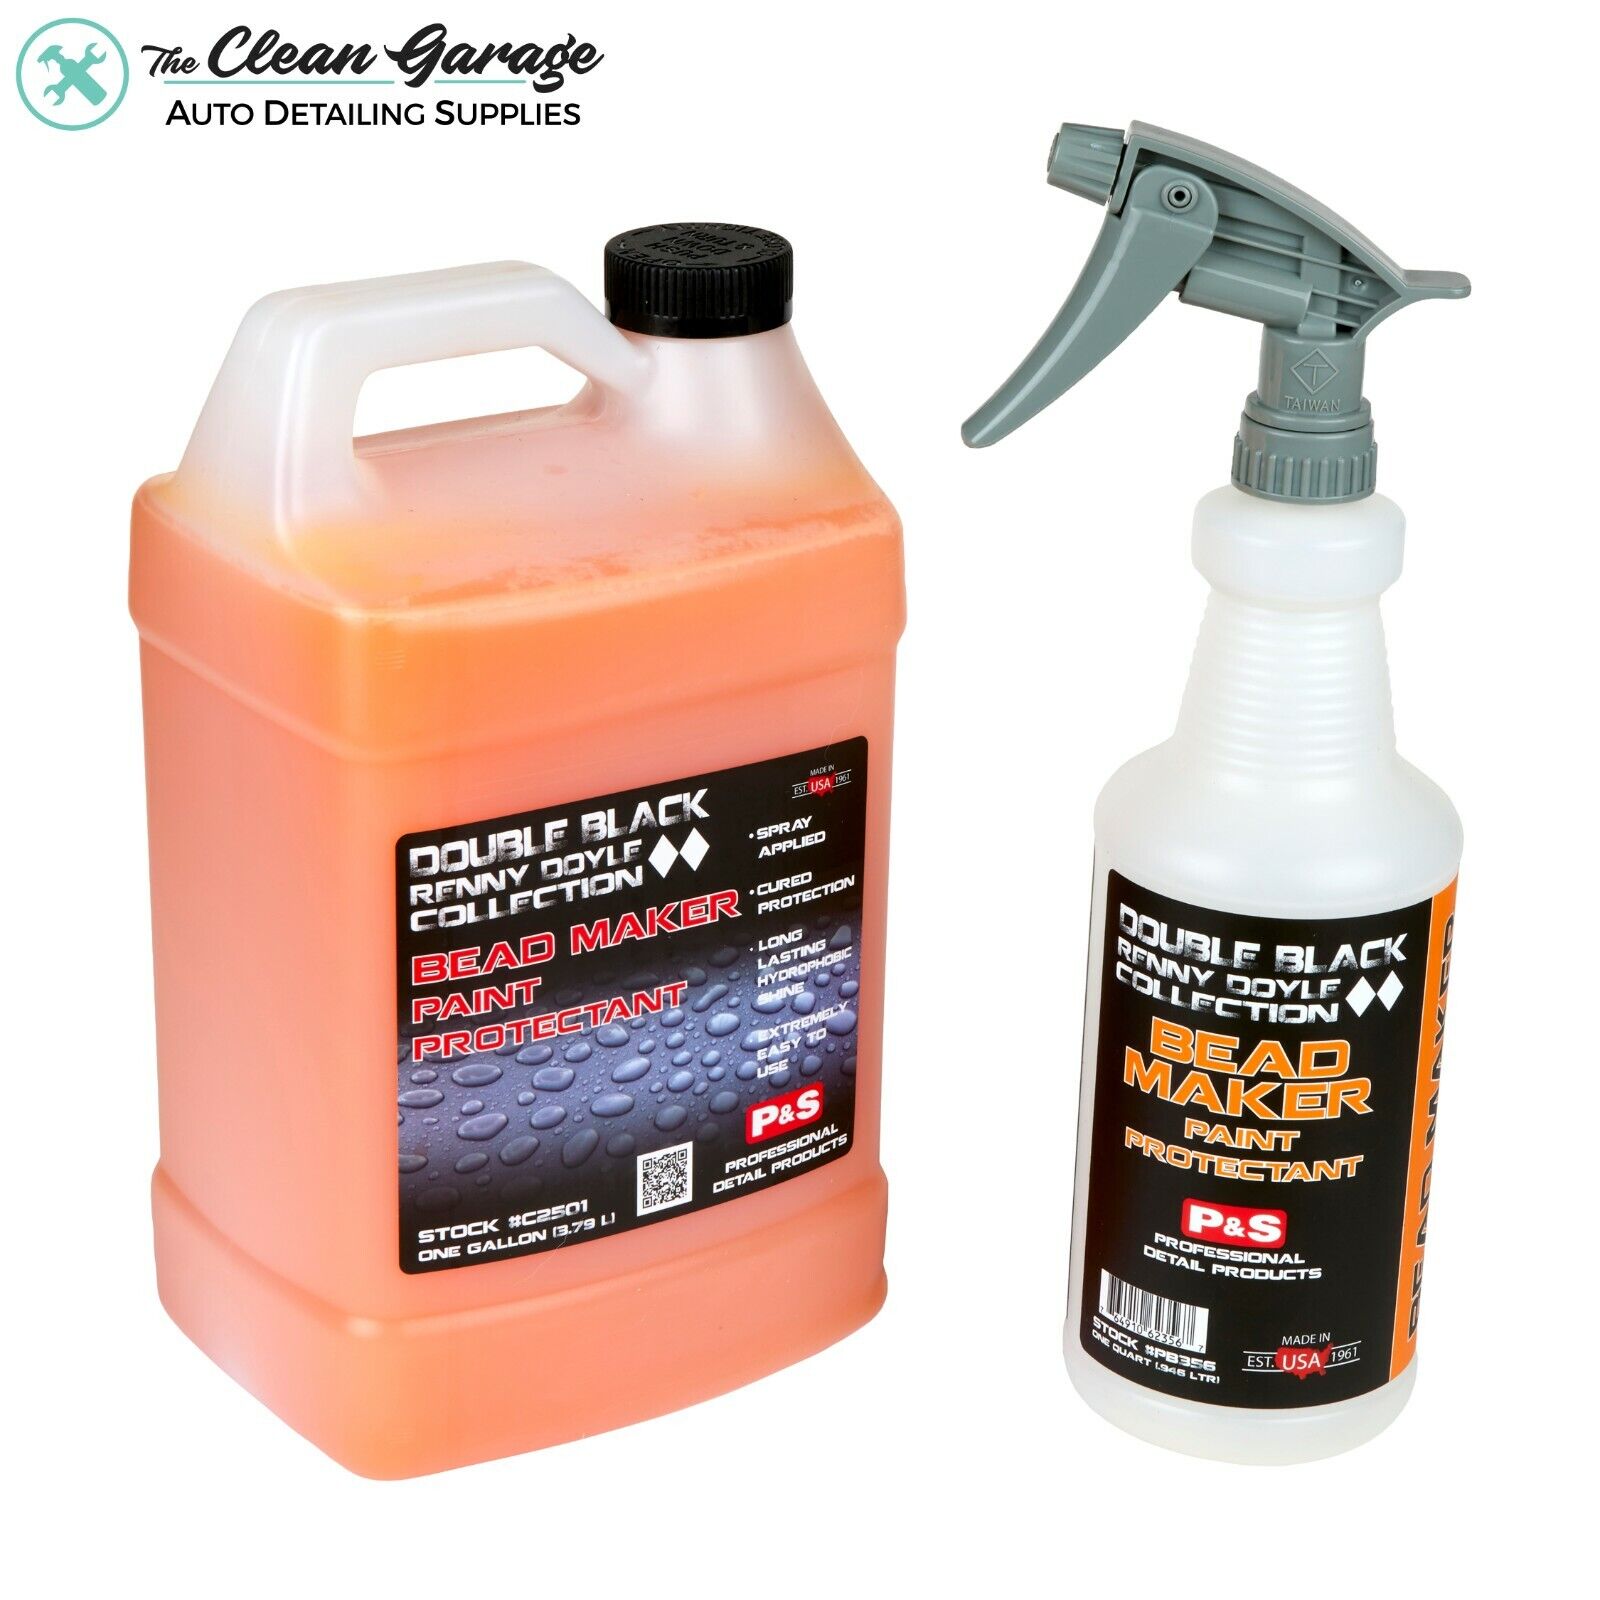 P&S Double Black Bead Maker Spray Sealant Gallon Kit 4 - 32oz Bottle and Sprayer